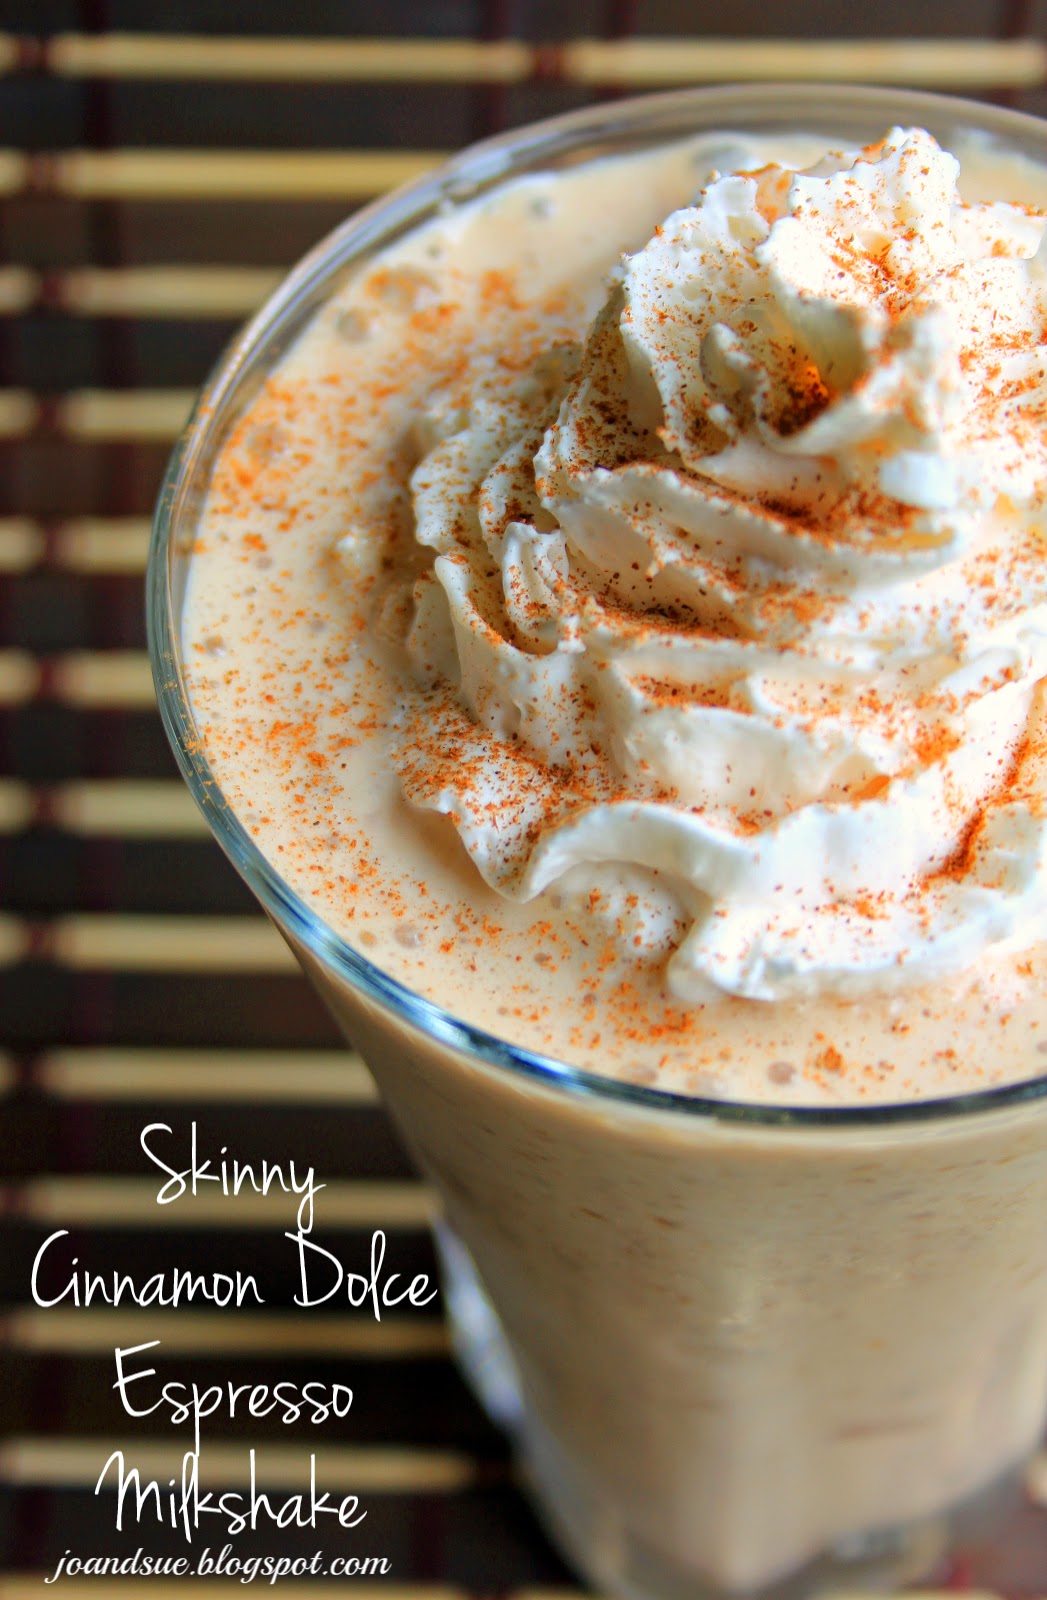 Jo and Sue: Skinny Cinnamon Dolce Espresso Milkshake